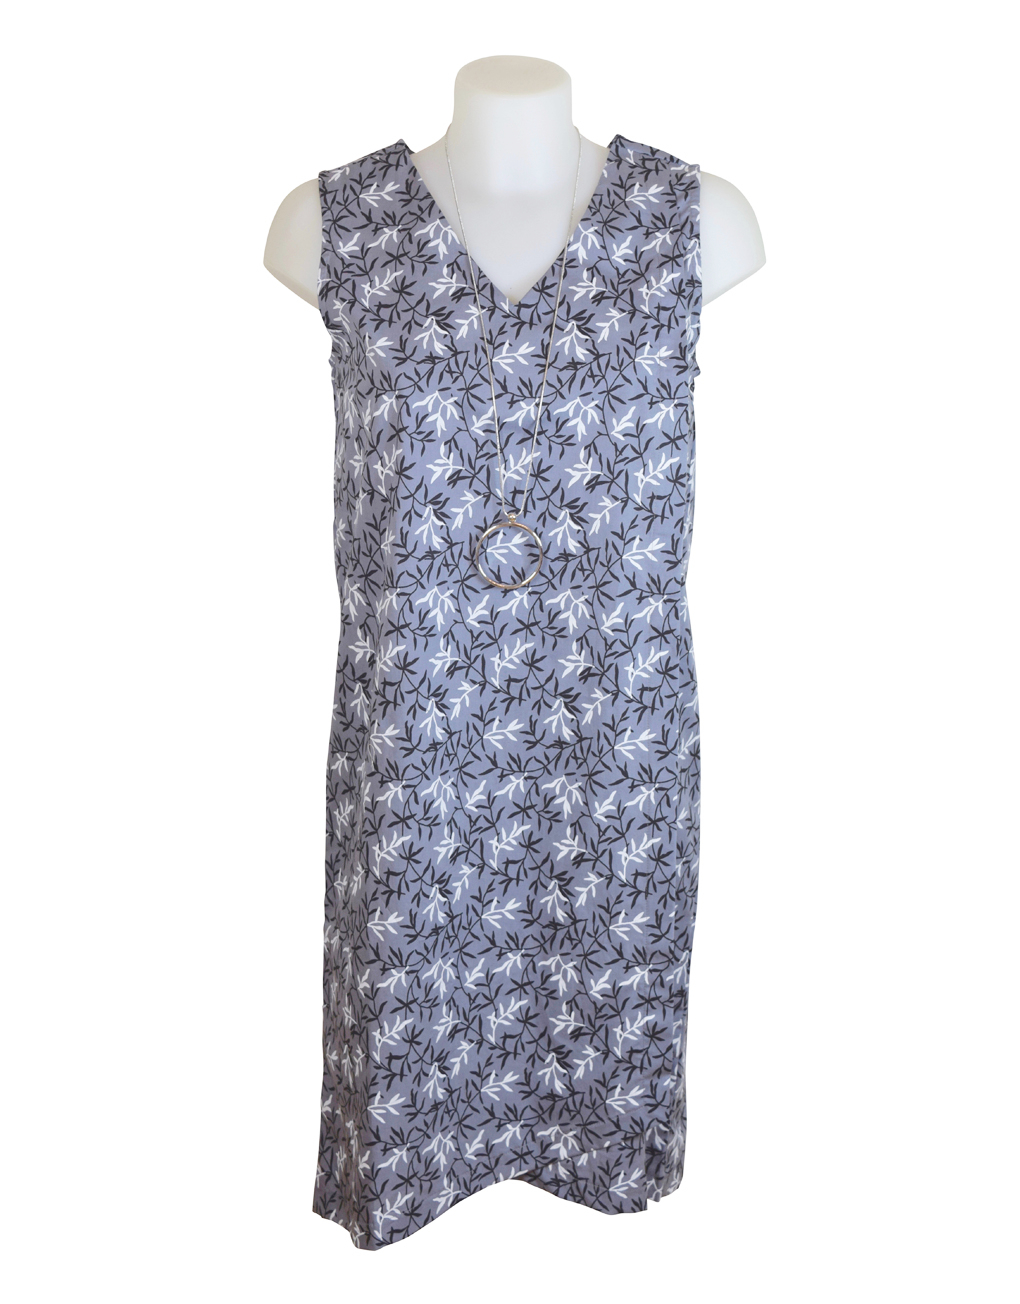 Alice Collins Summer Dress Okaleaf Grey - Fashion Fix Online